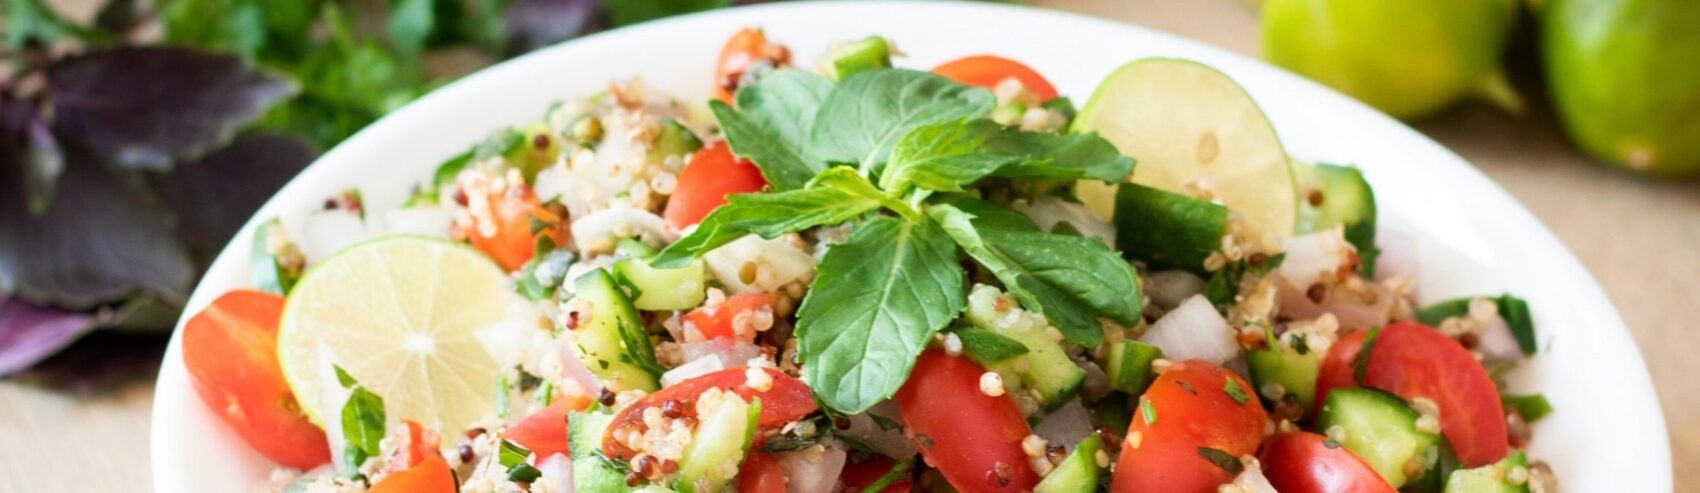 Salade froide au quinoa